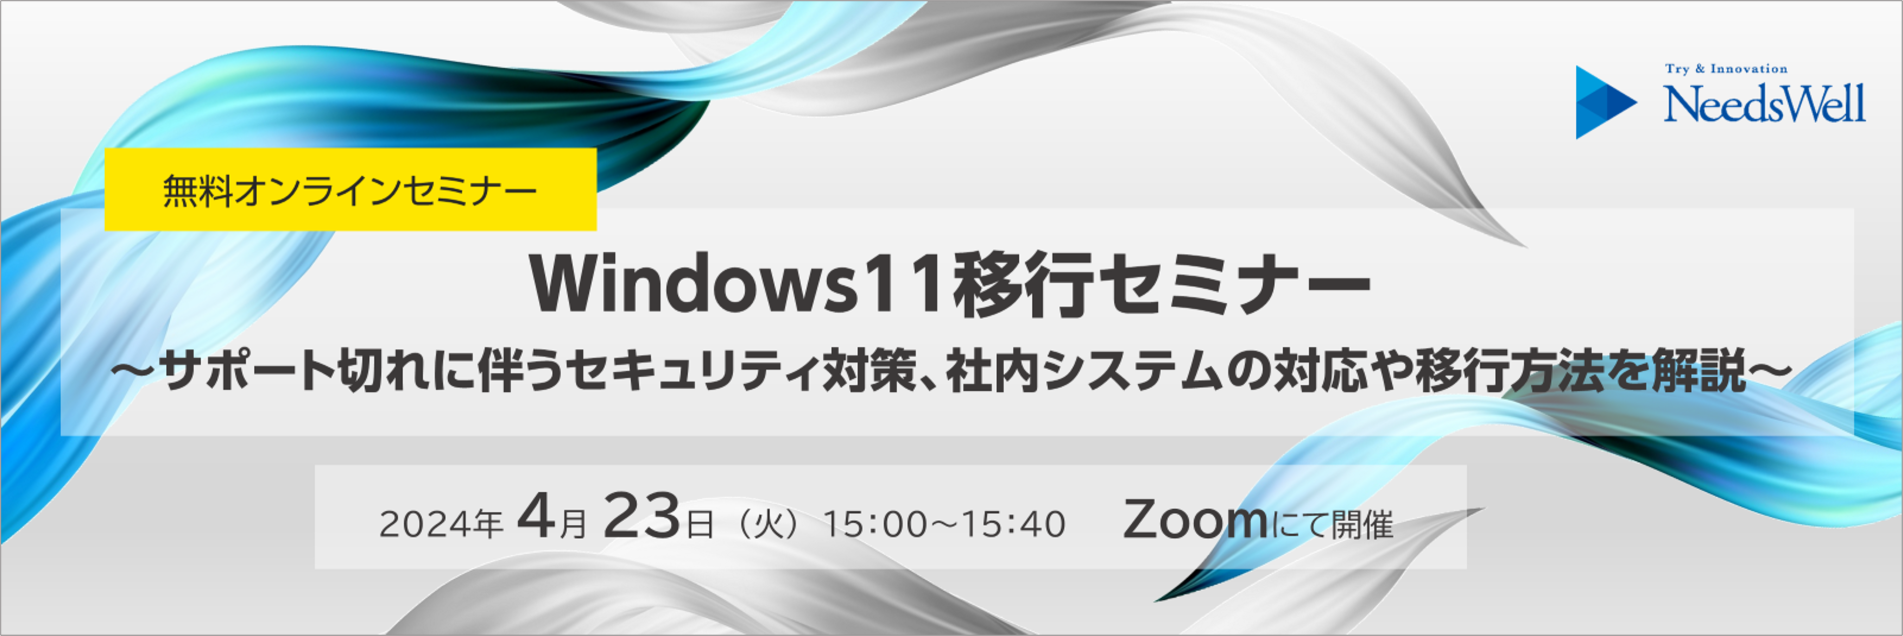 Windows11移行セミナー,11MGN